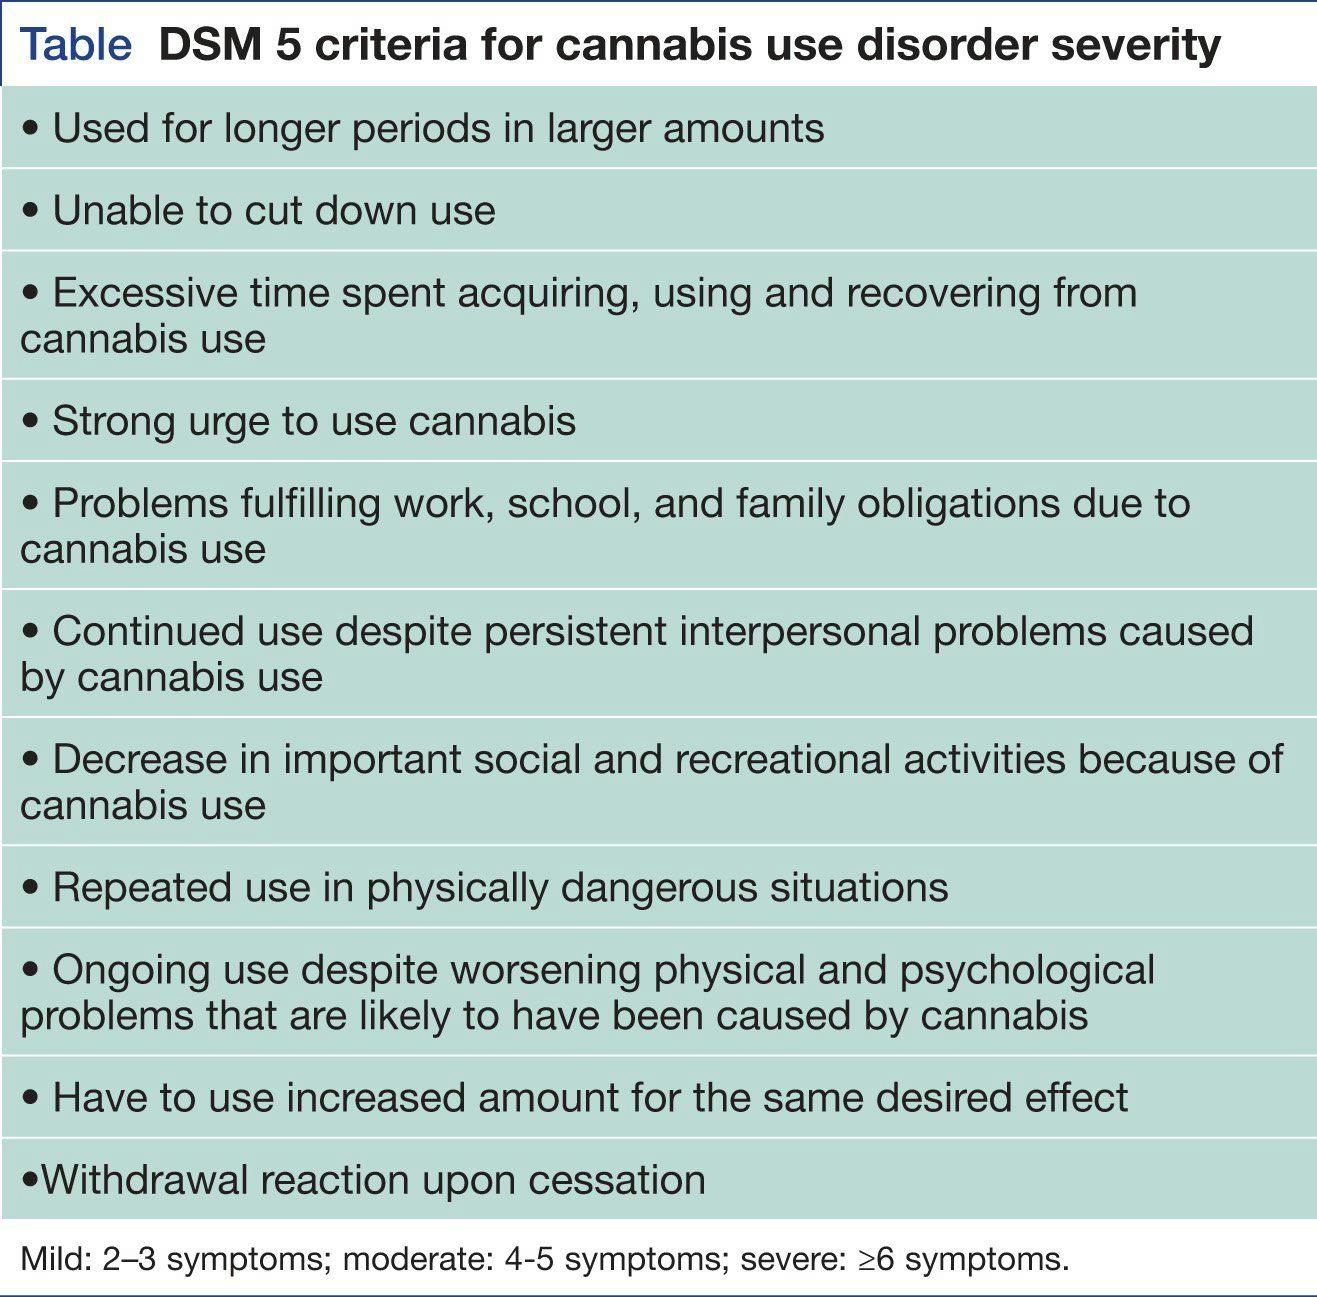 DSM 5 criteria for cannabis use disorder severity